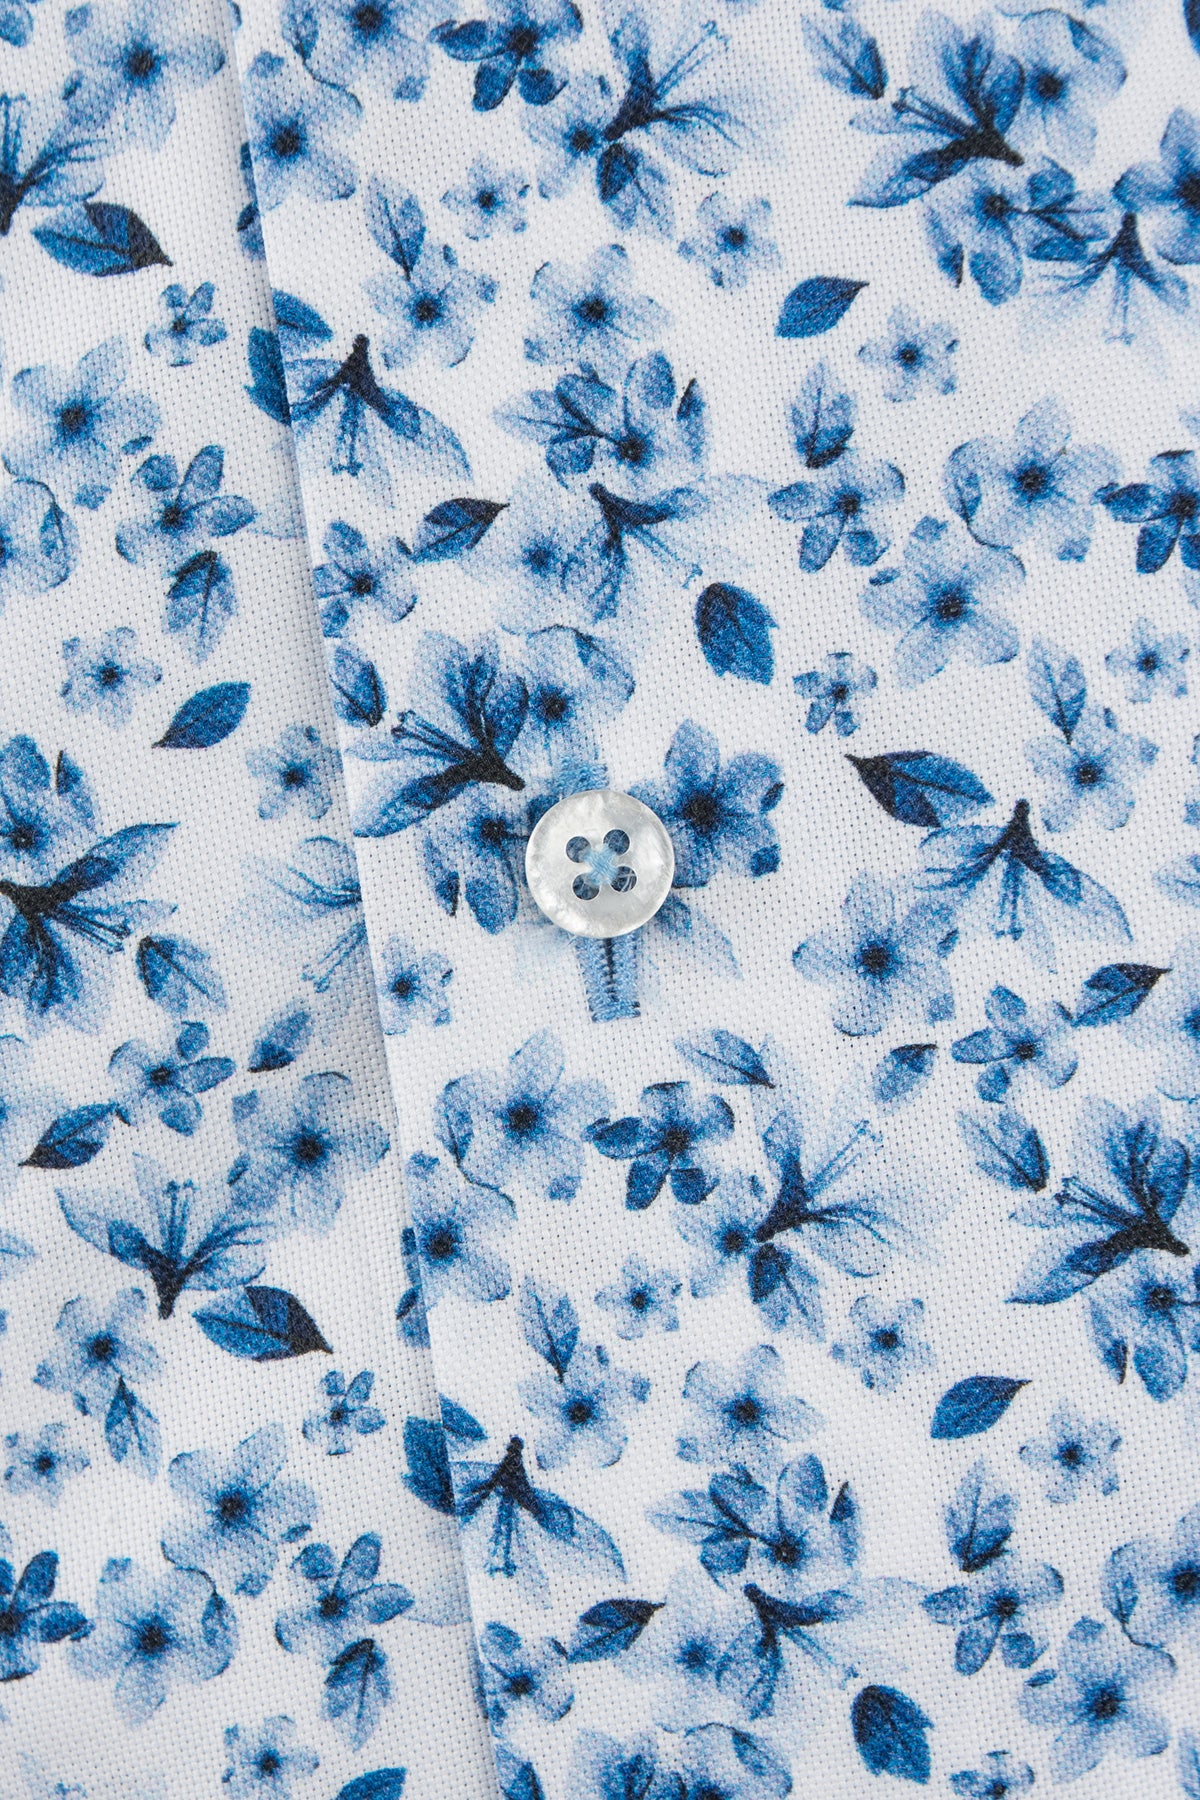 Blue flower printed button down slim fit shirt